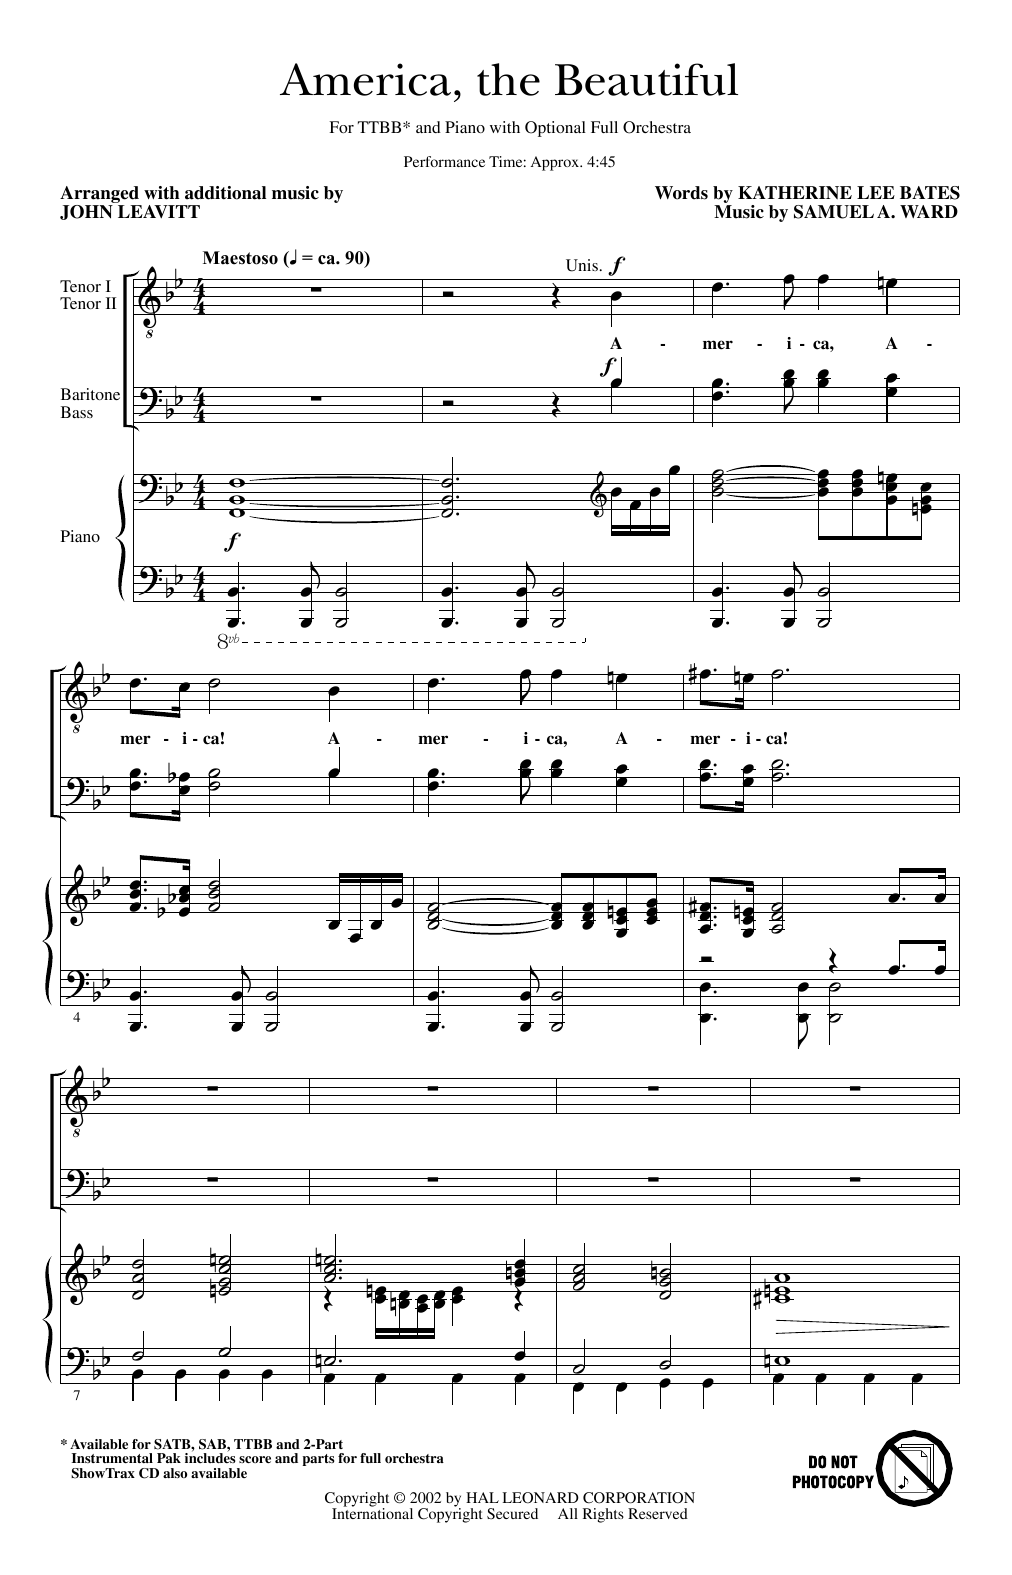 Samuel A. Ward America, The Beautiful (arr. John Leavitt) Sheet Music Notes & Chords for SAB Choir - Download or Print PDF